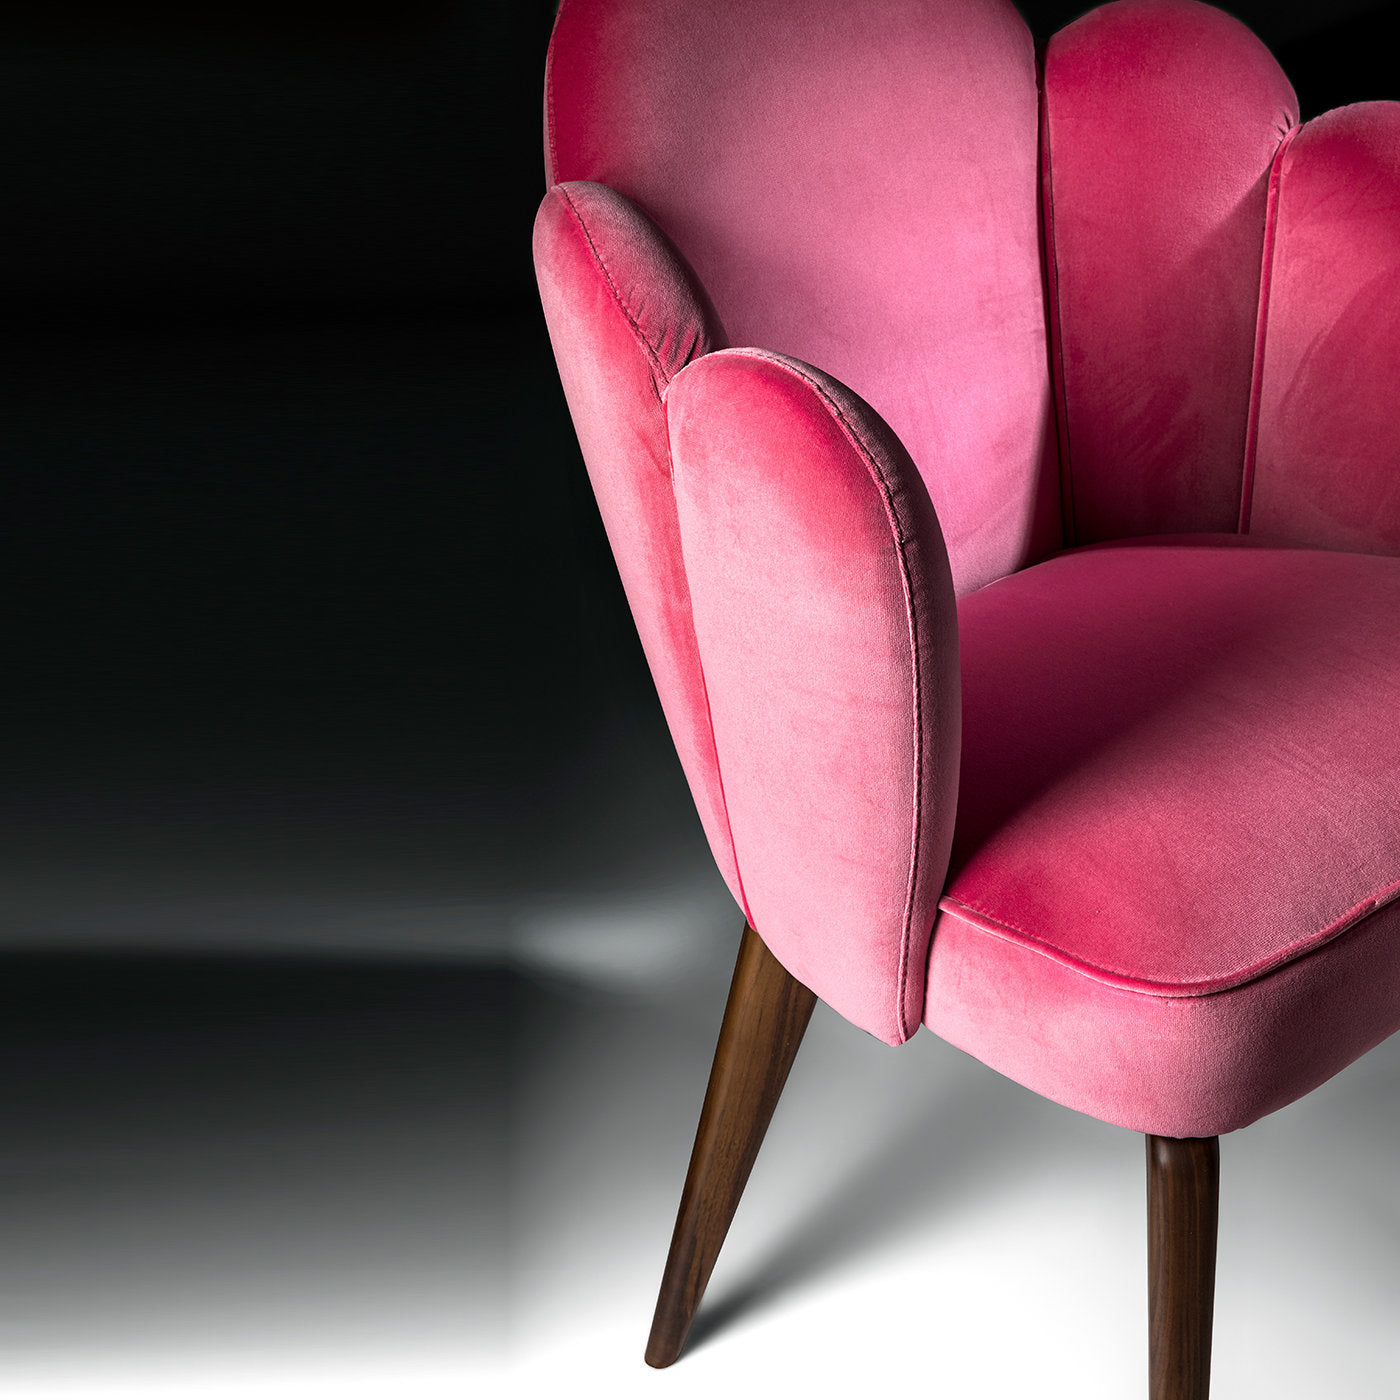 Small Flora chair by Giovanna Azzarello  - Alternative view 1